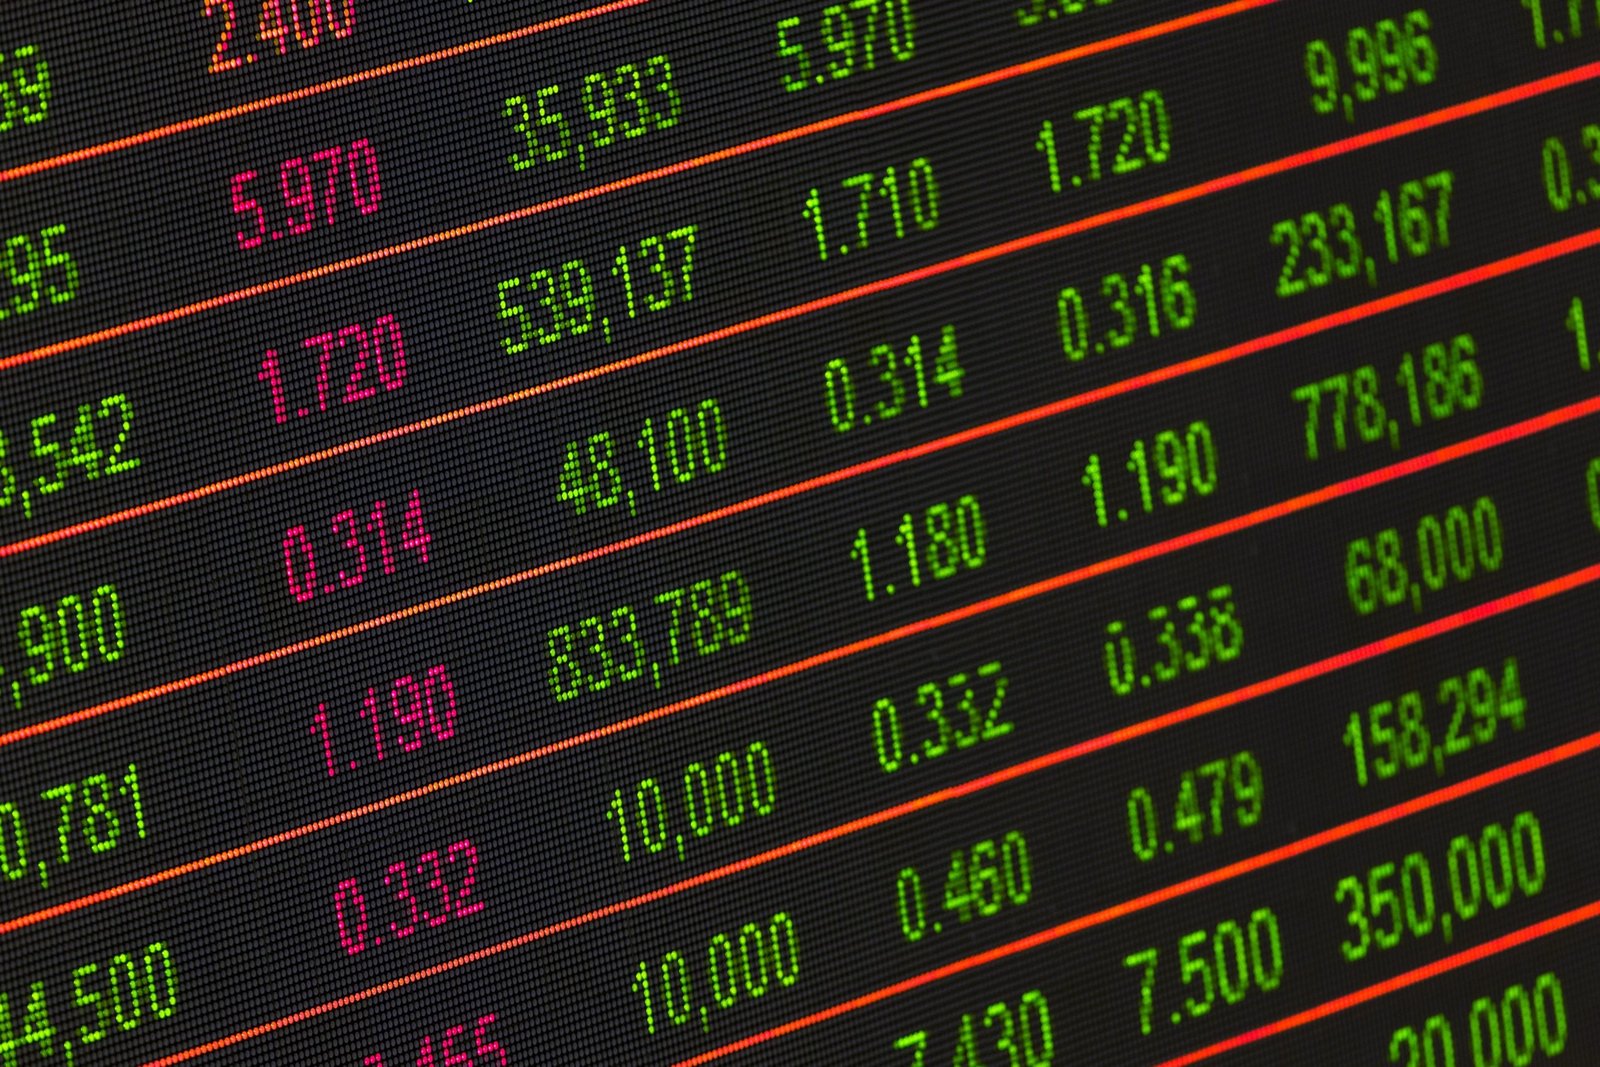 Gerenciamento de risco de mercado dos investimentos através dos instrumentos estatístico - financeiro: